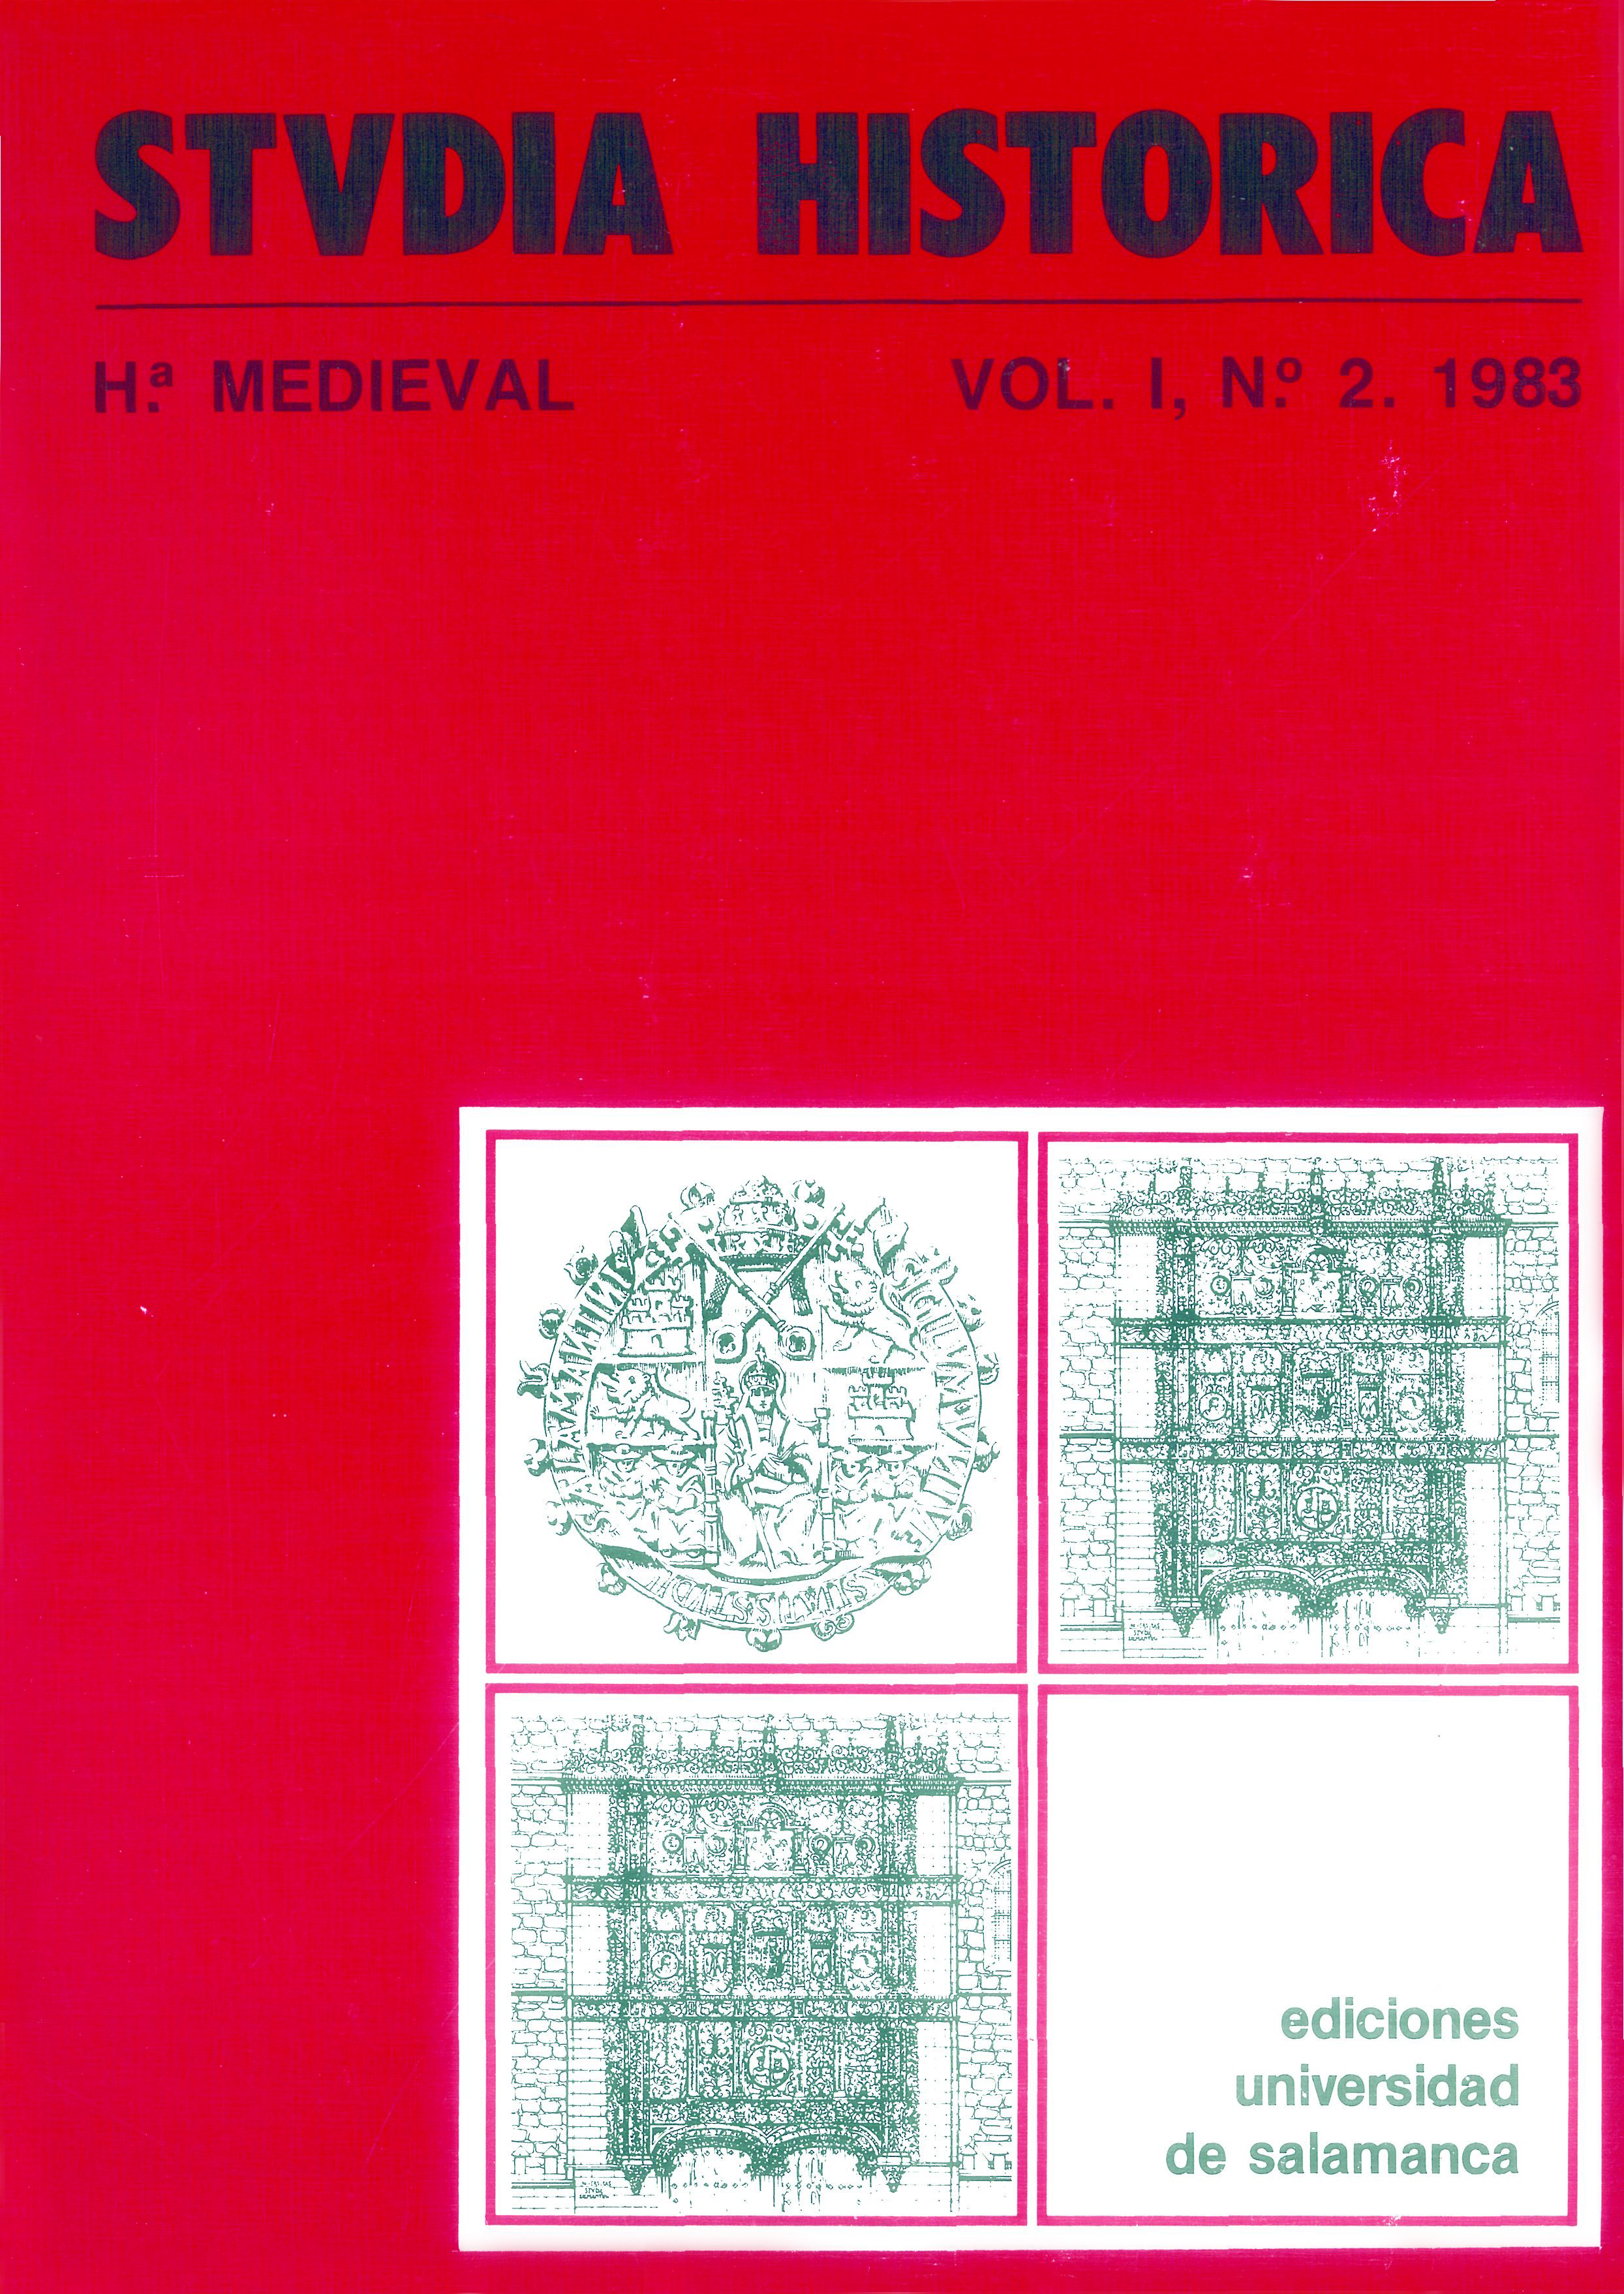                         Ver Vol. 1 (1983)
                    